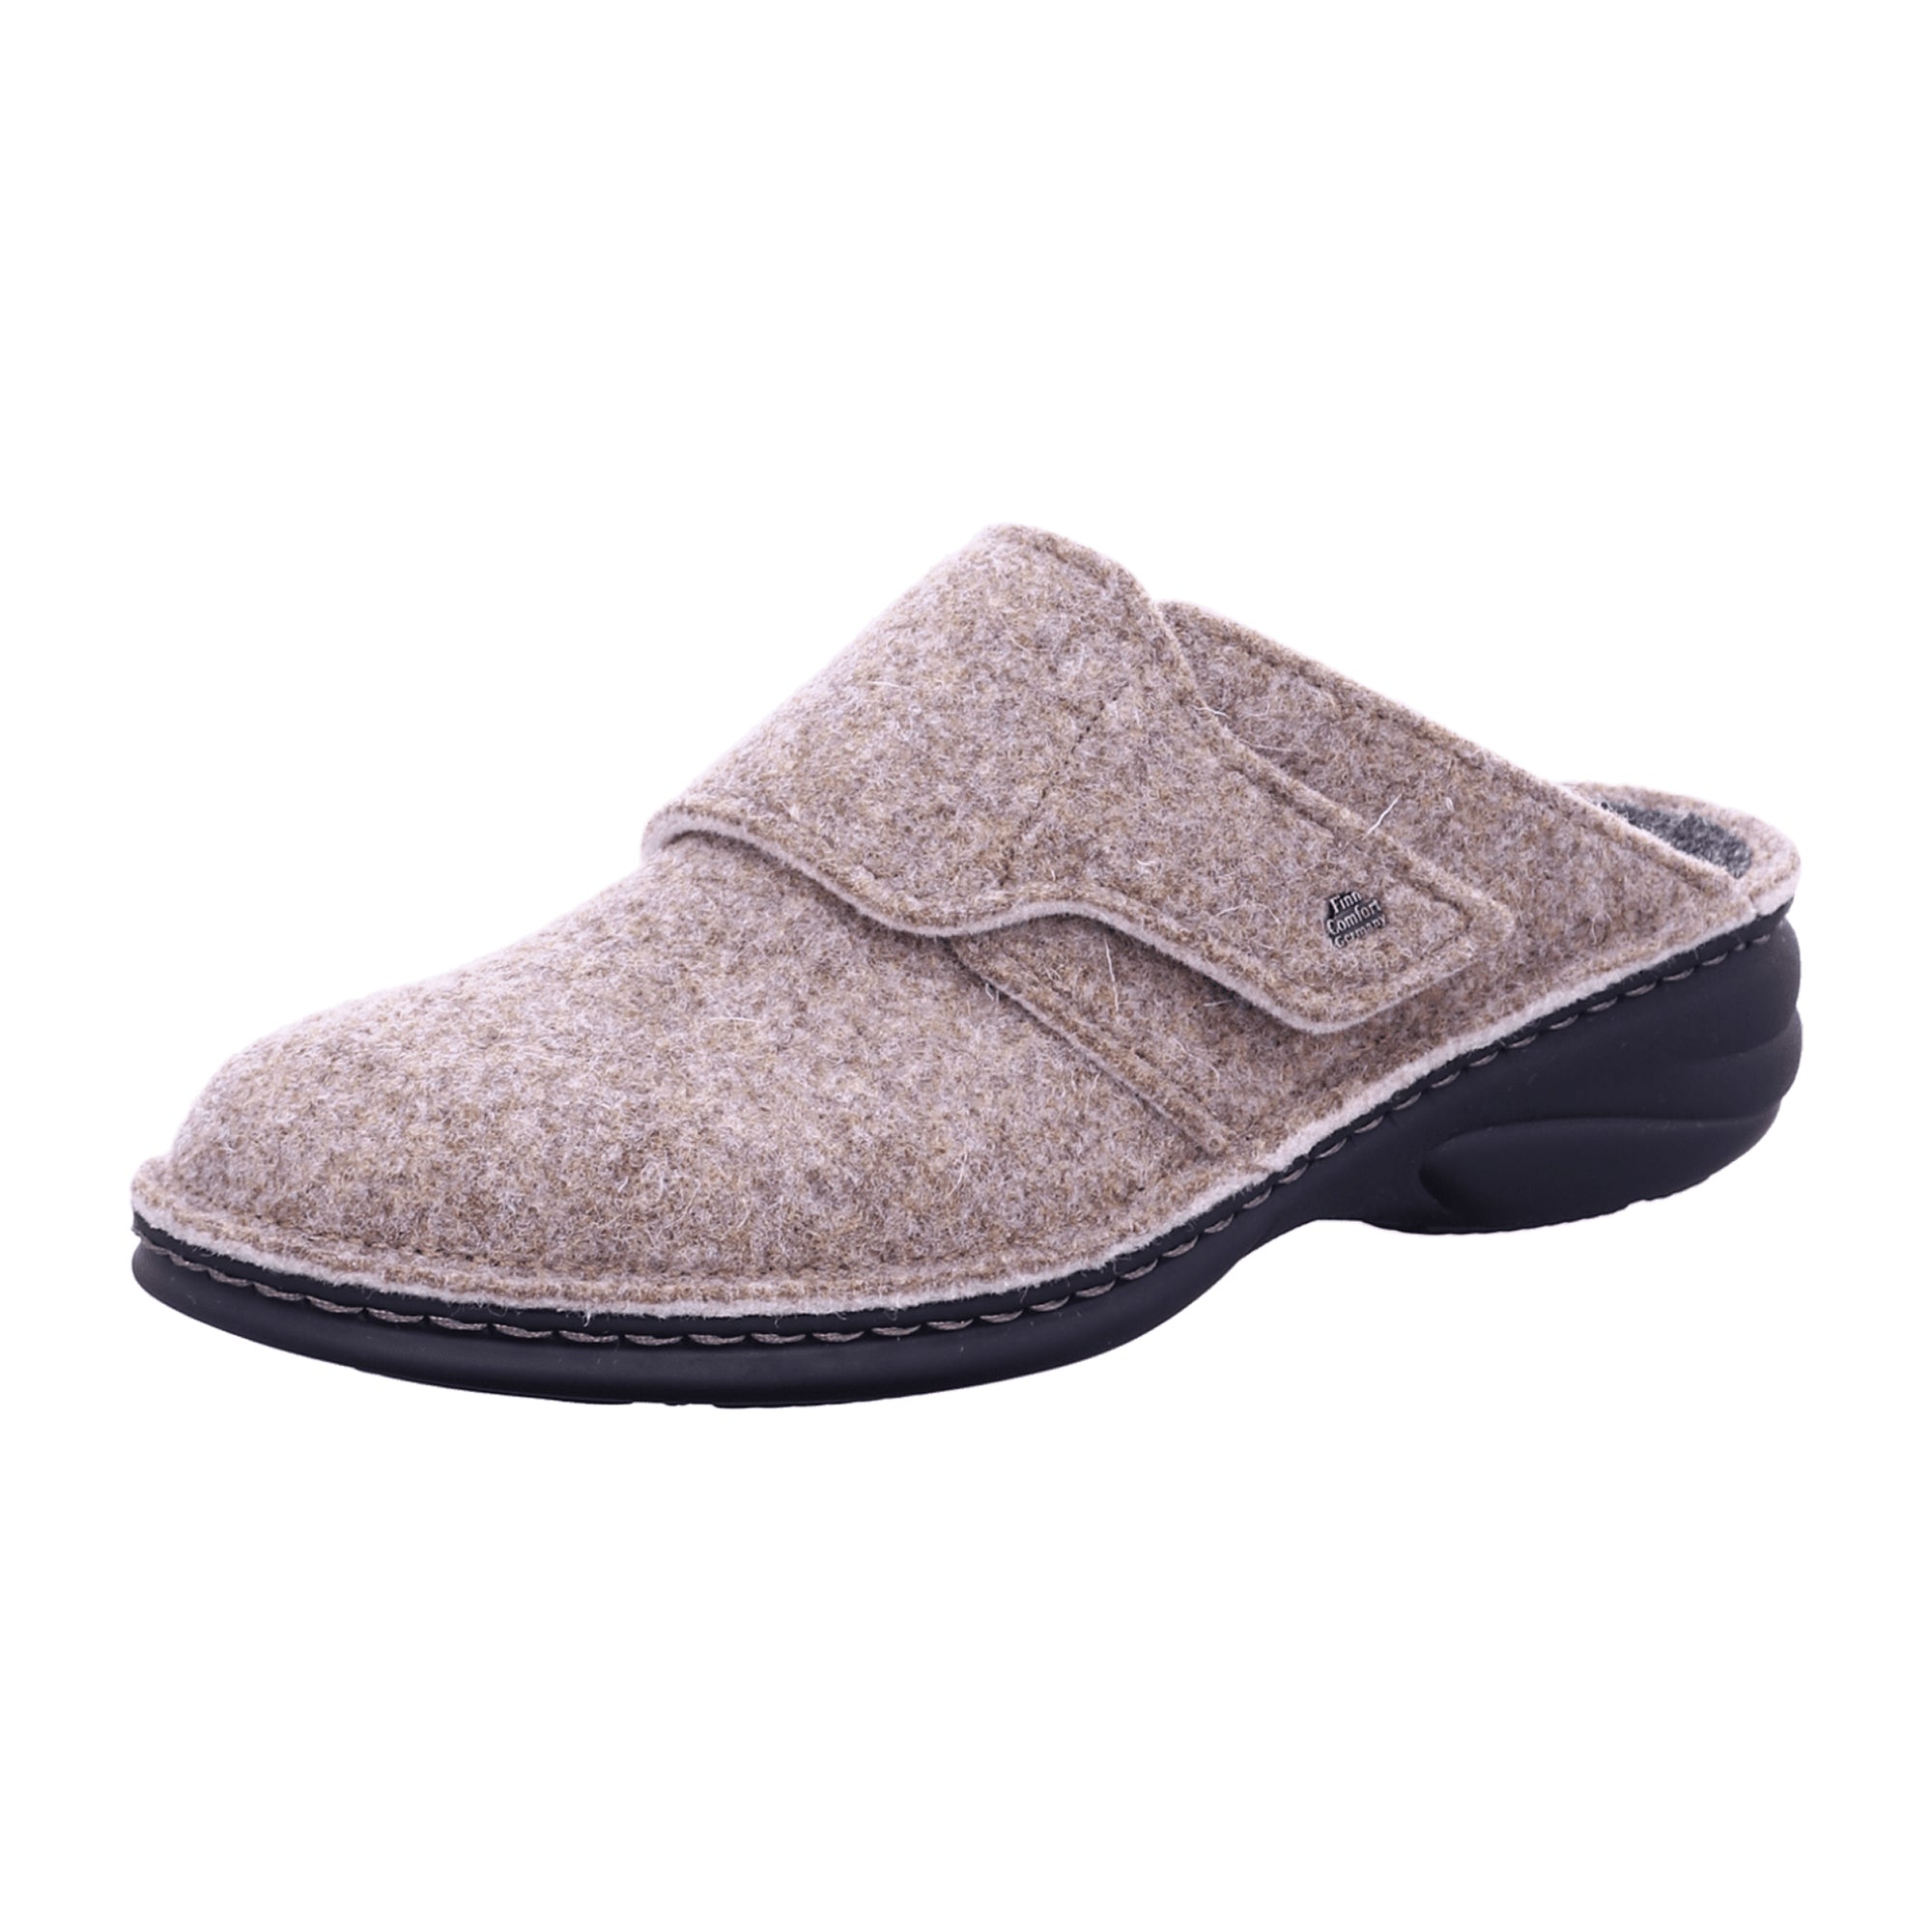 Finn Comfort Goms Women's Beige Comfort Shoes - Durable & Stylish